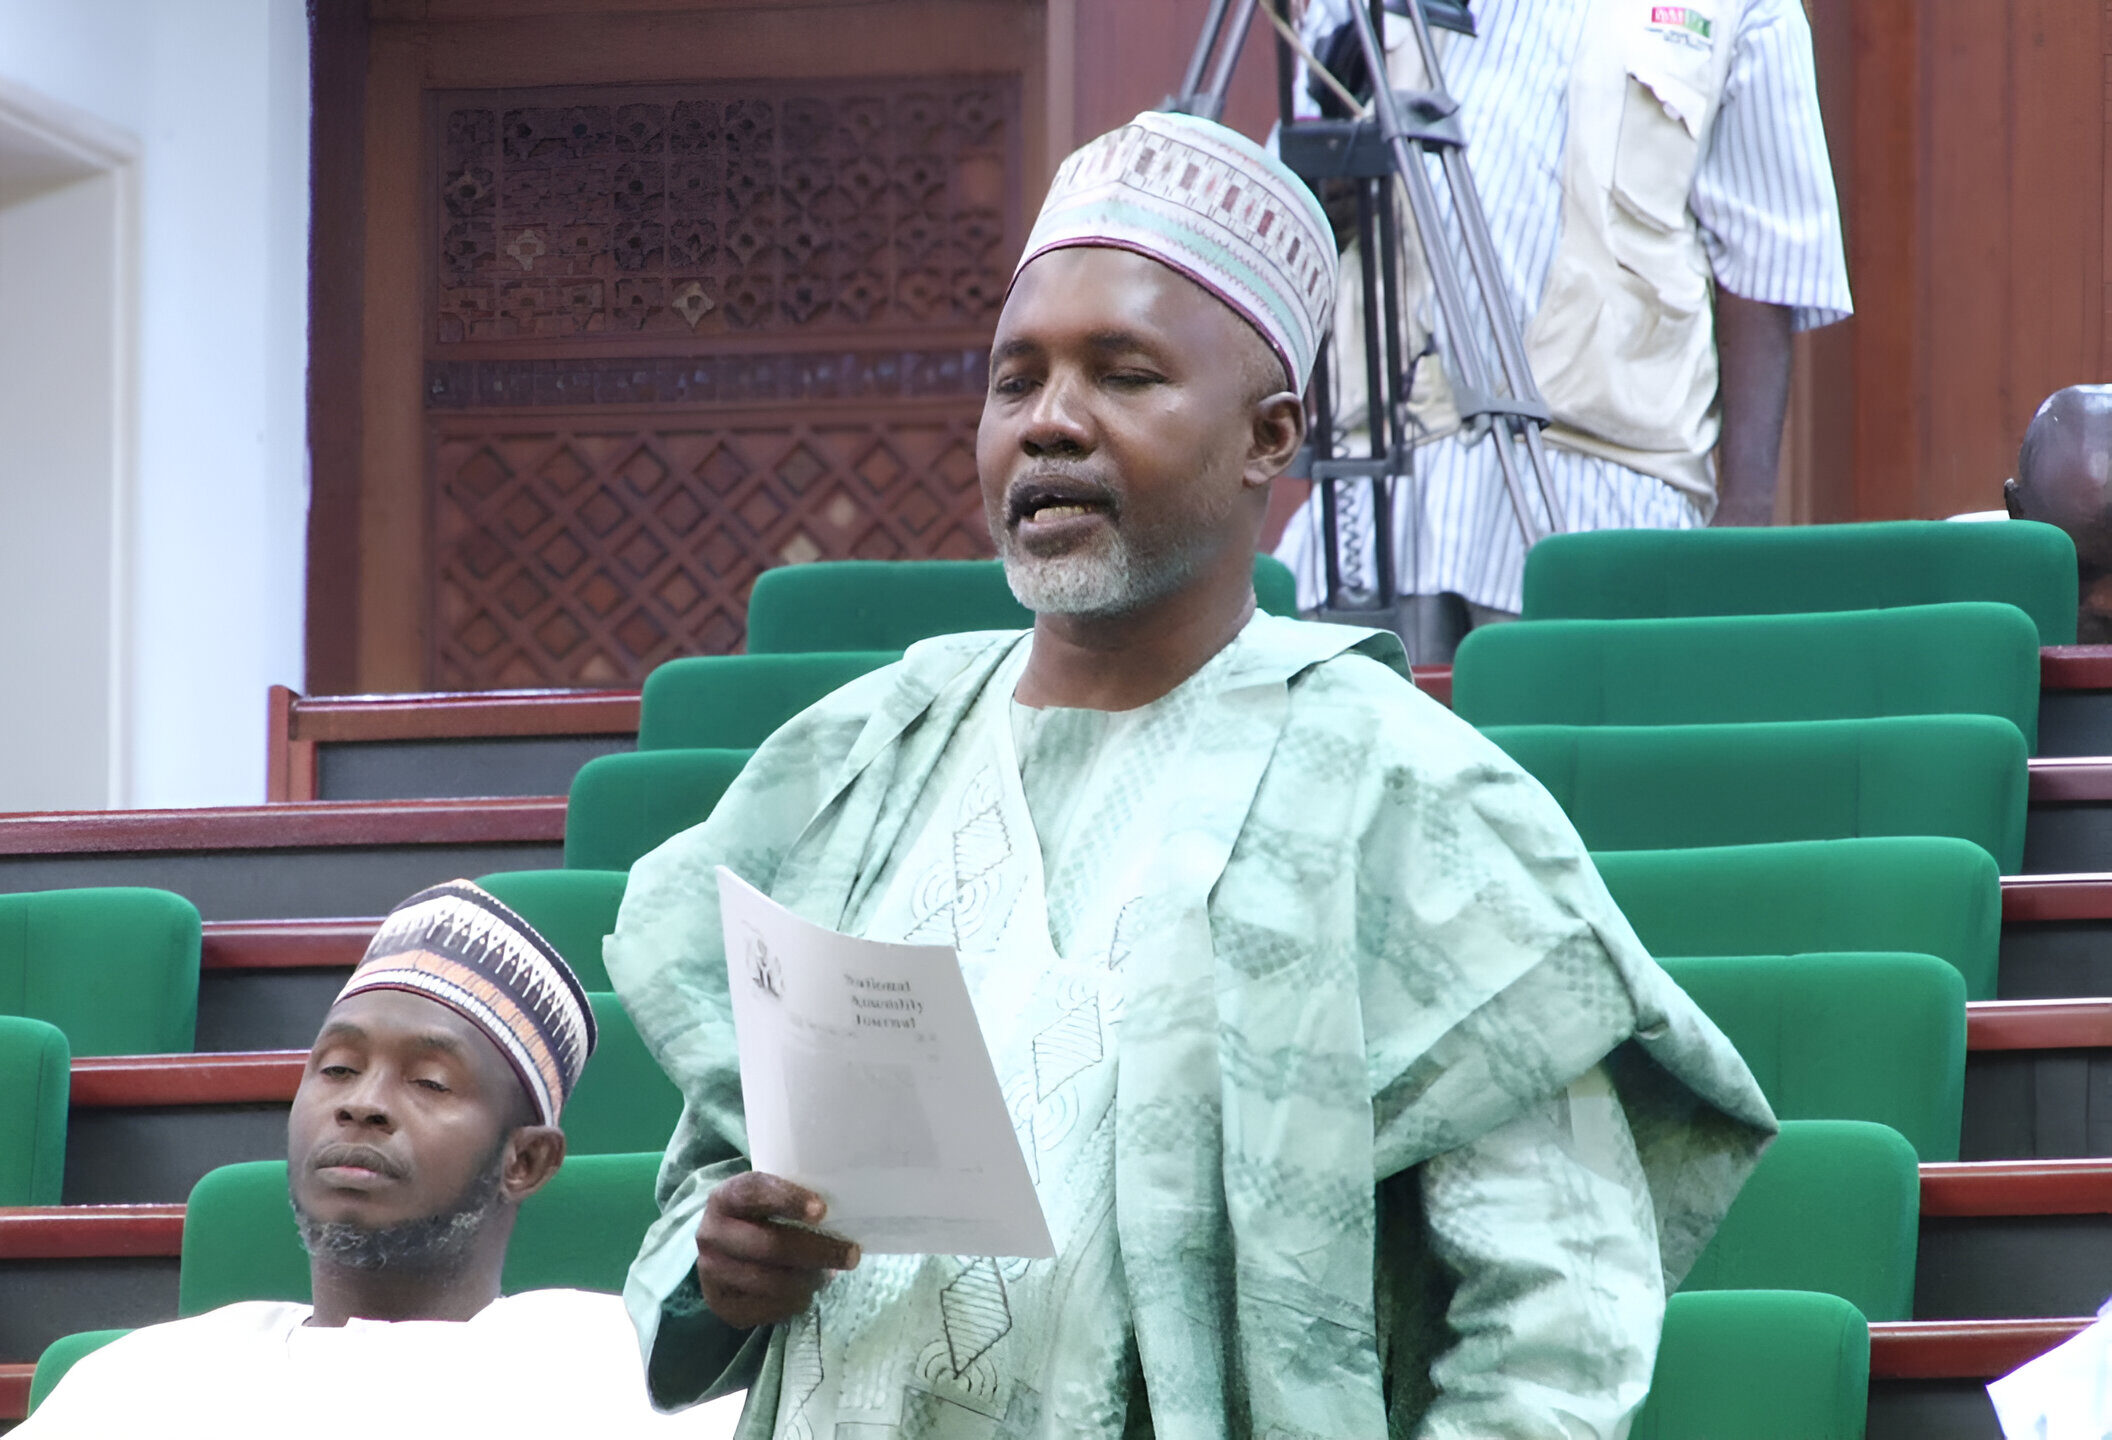 Yusuf Tanko Sununu, a member of the House of Representatives from the Yauri/Shanga/Ngaski Federal Constituency